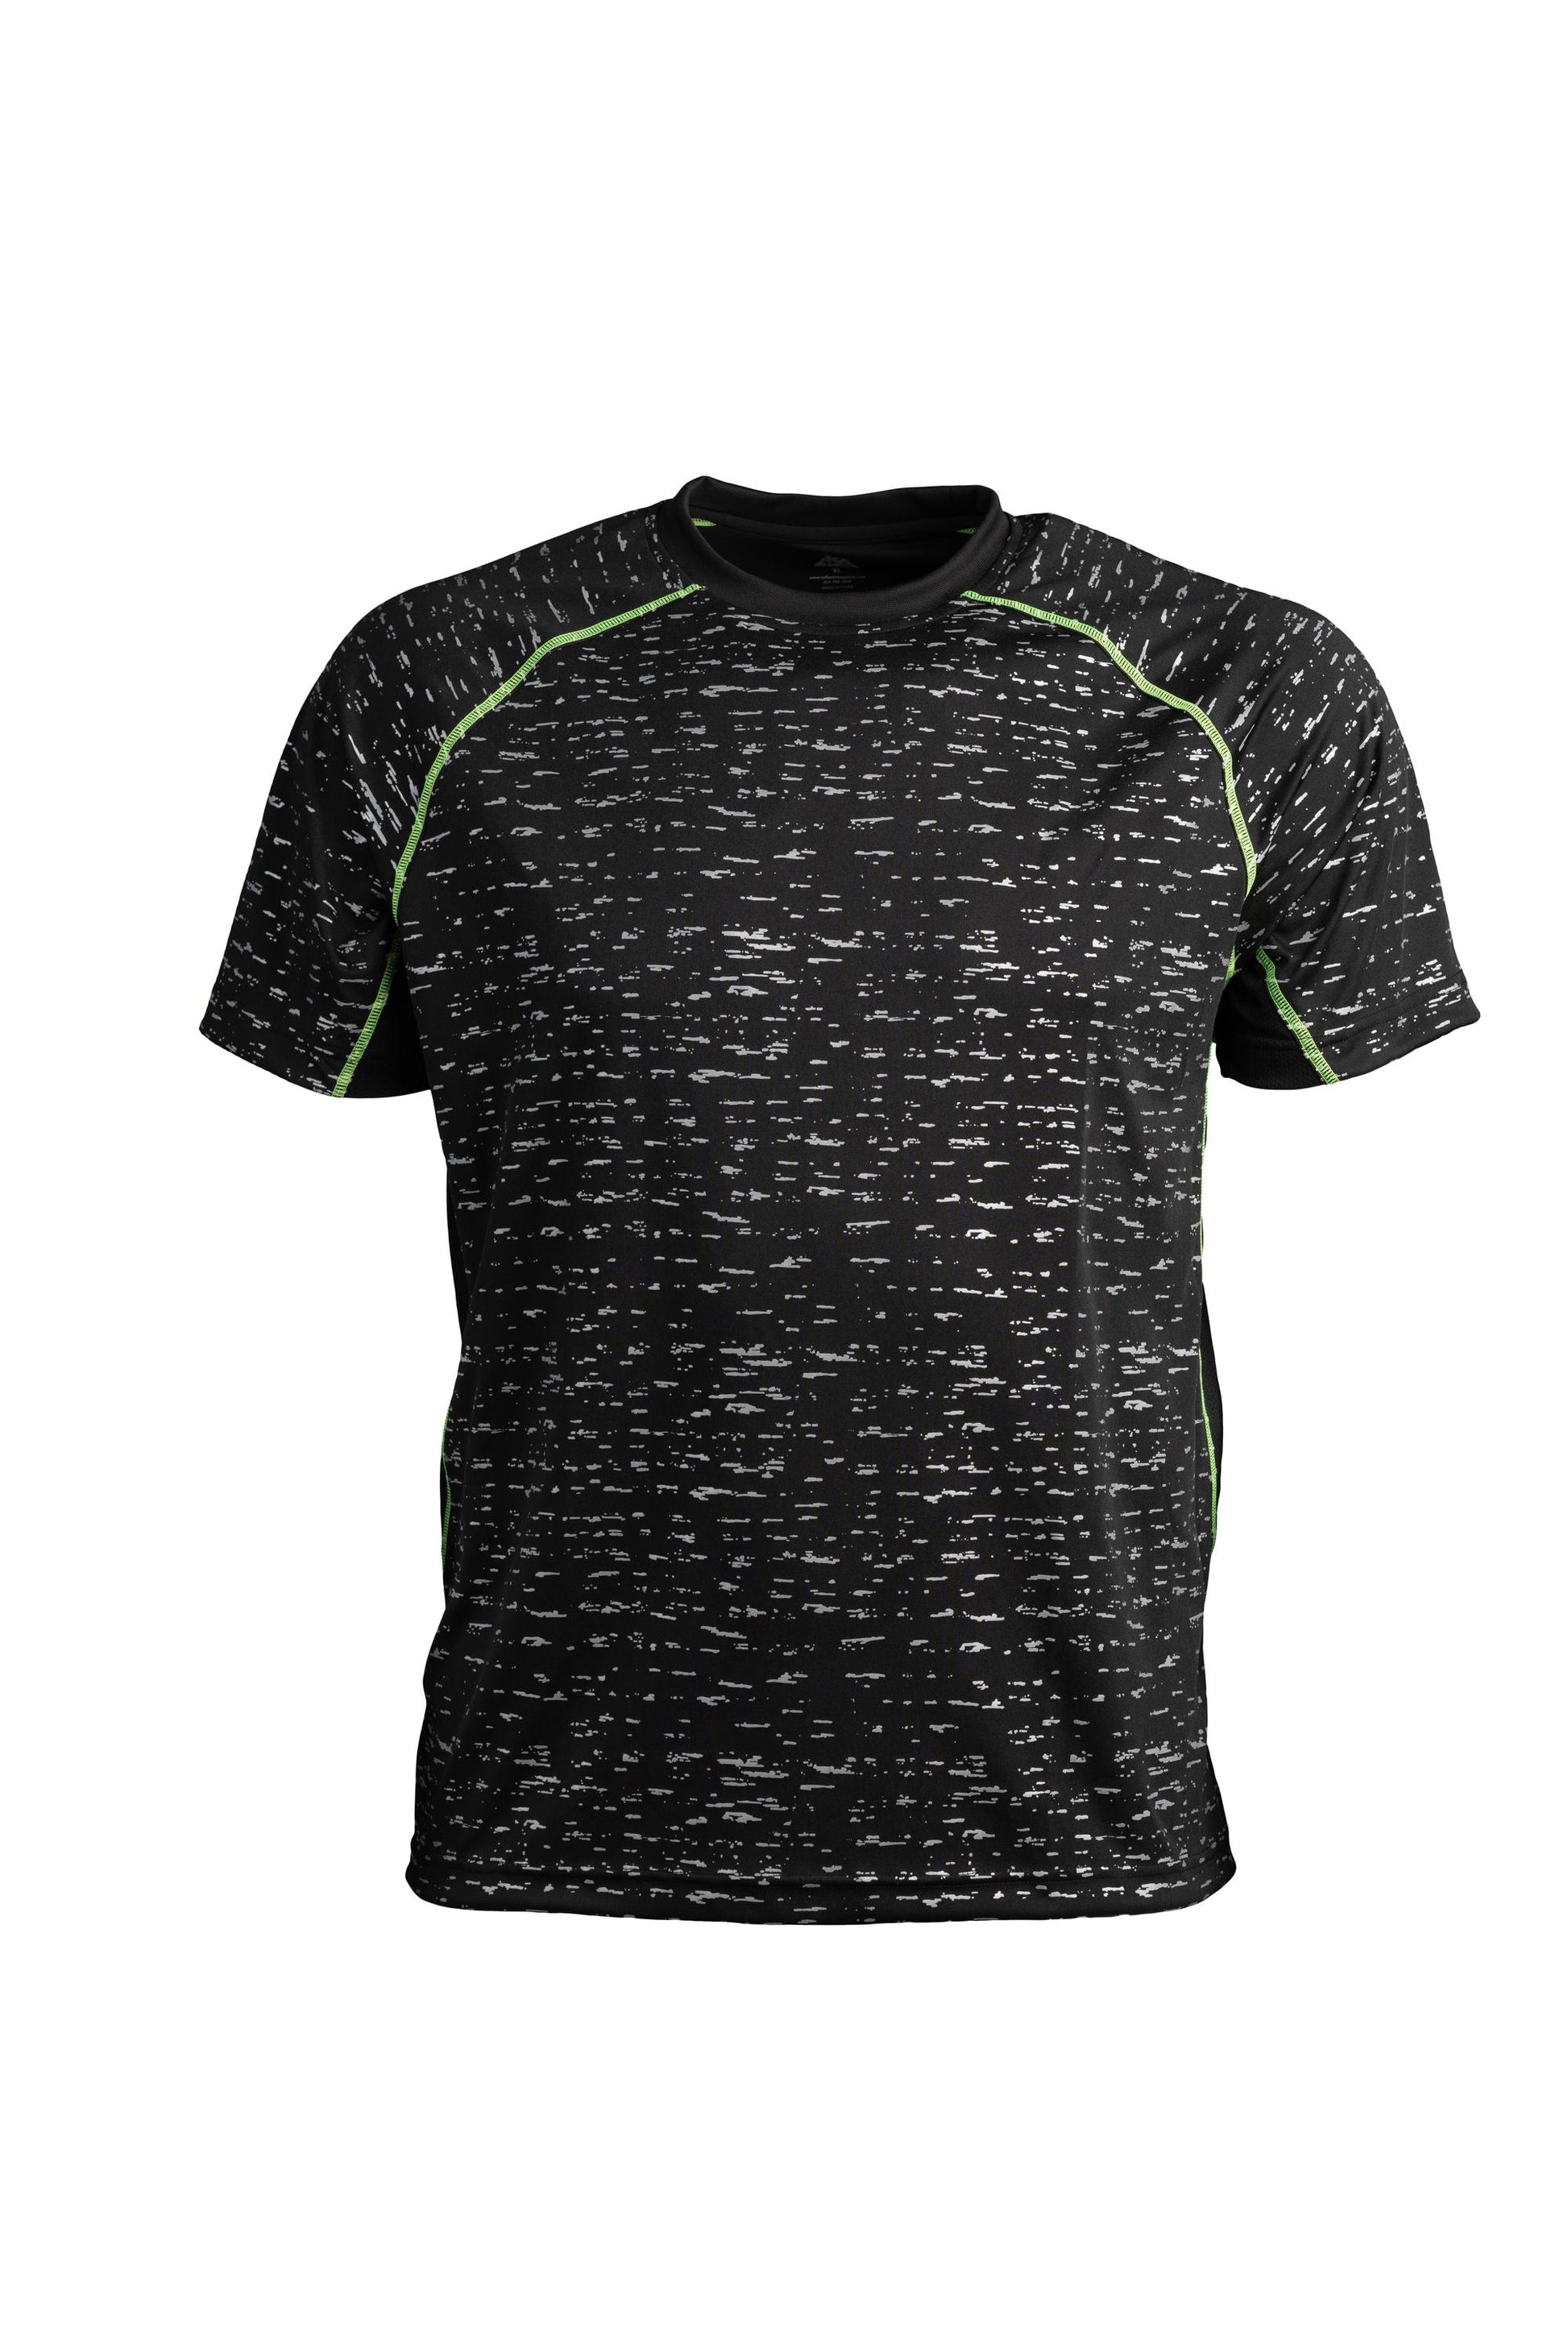 Men’s Black Short Sleeve WildSpark™ Athletic Shirt